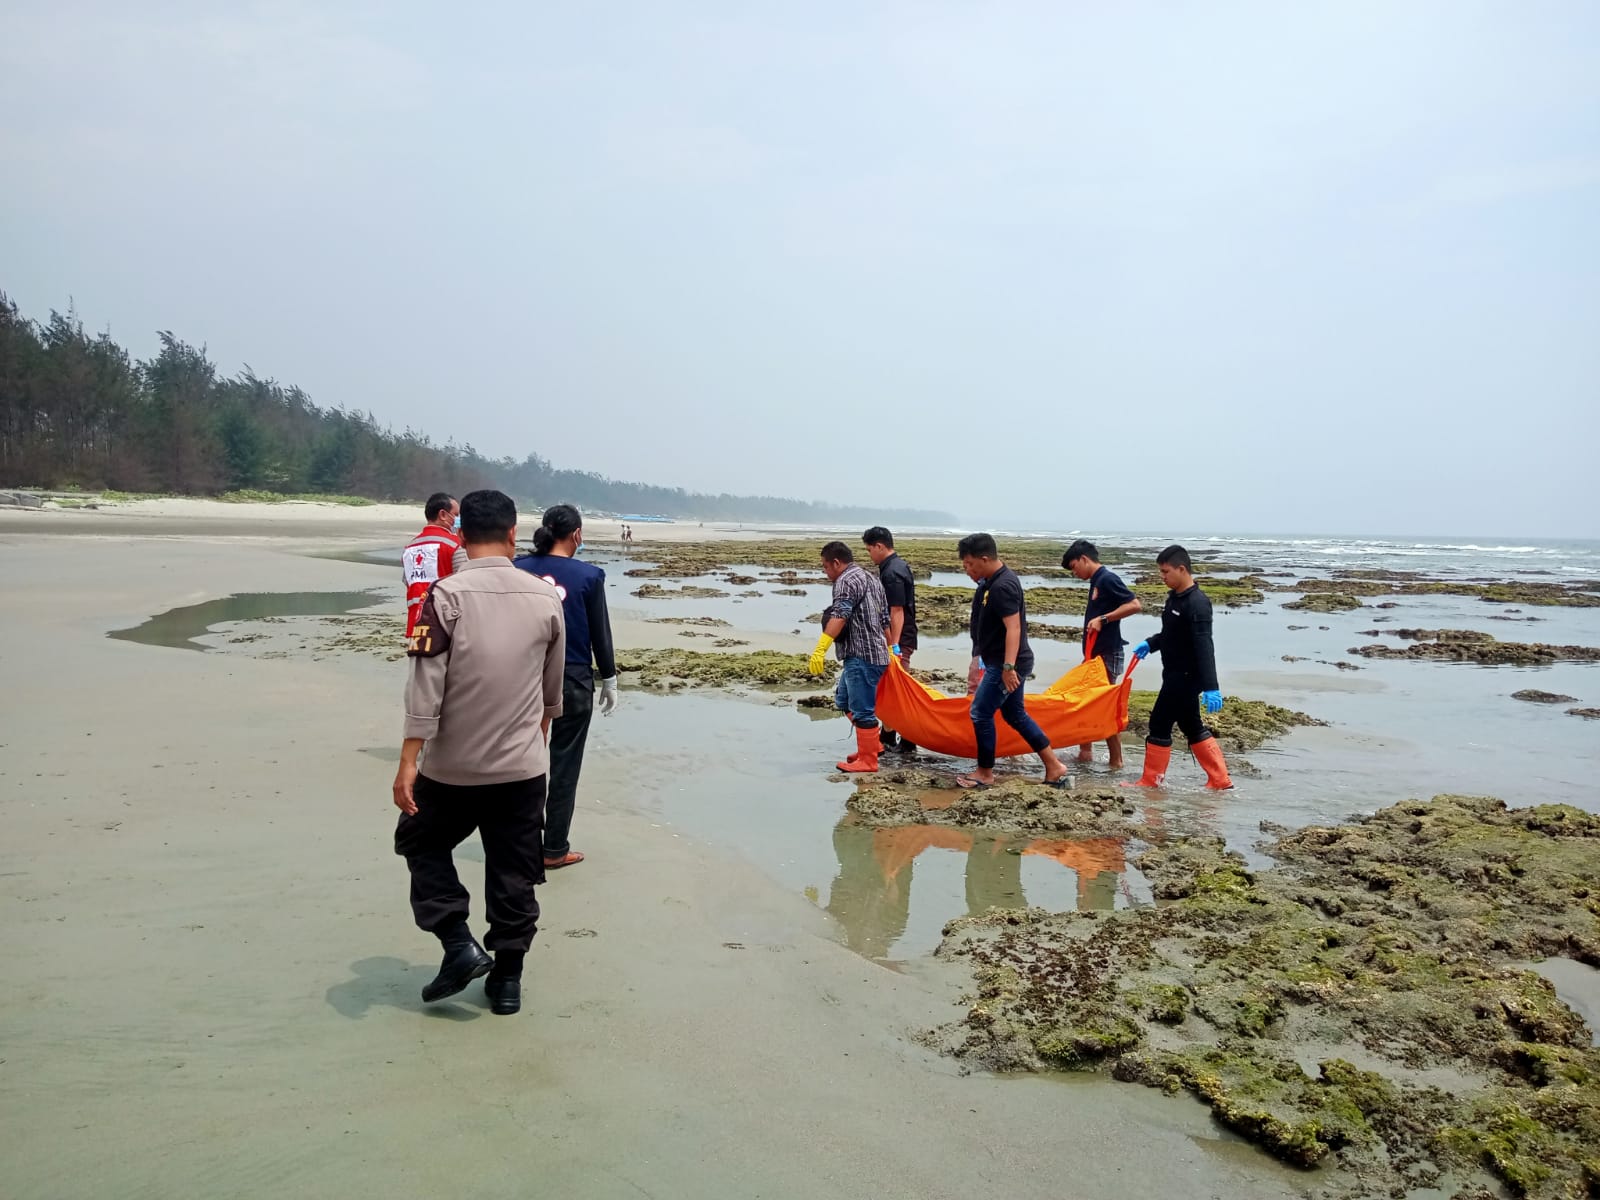 Identitas Mayat di Pantai Panjang Terungkap, Ternyata Warga Kota Bengkulu, Ini Alamat Lengkapnya